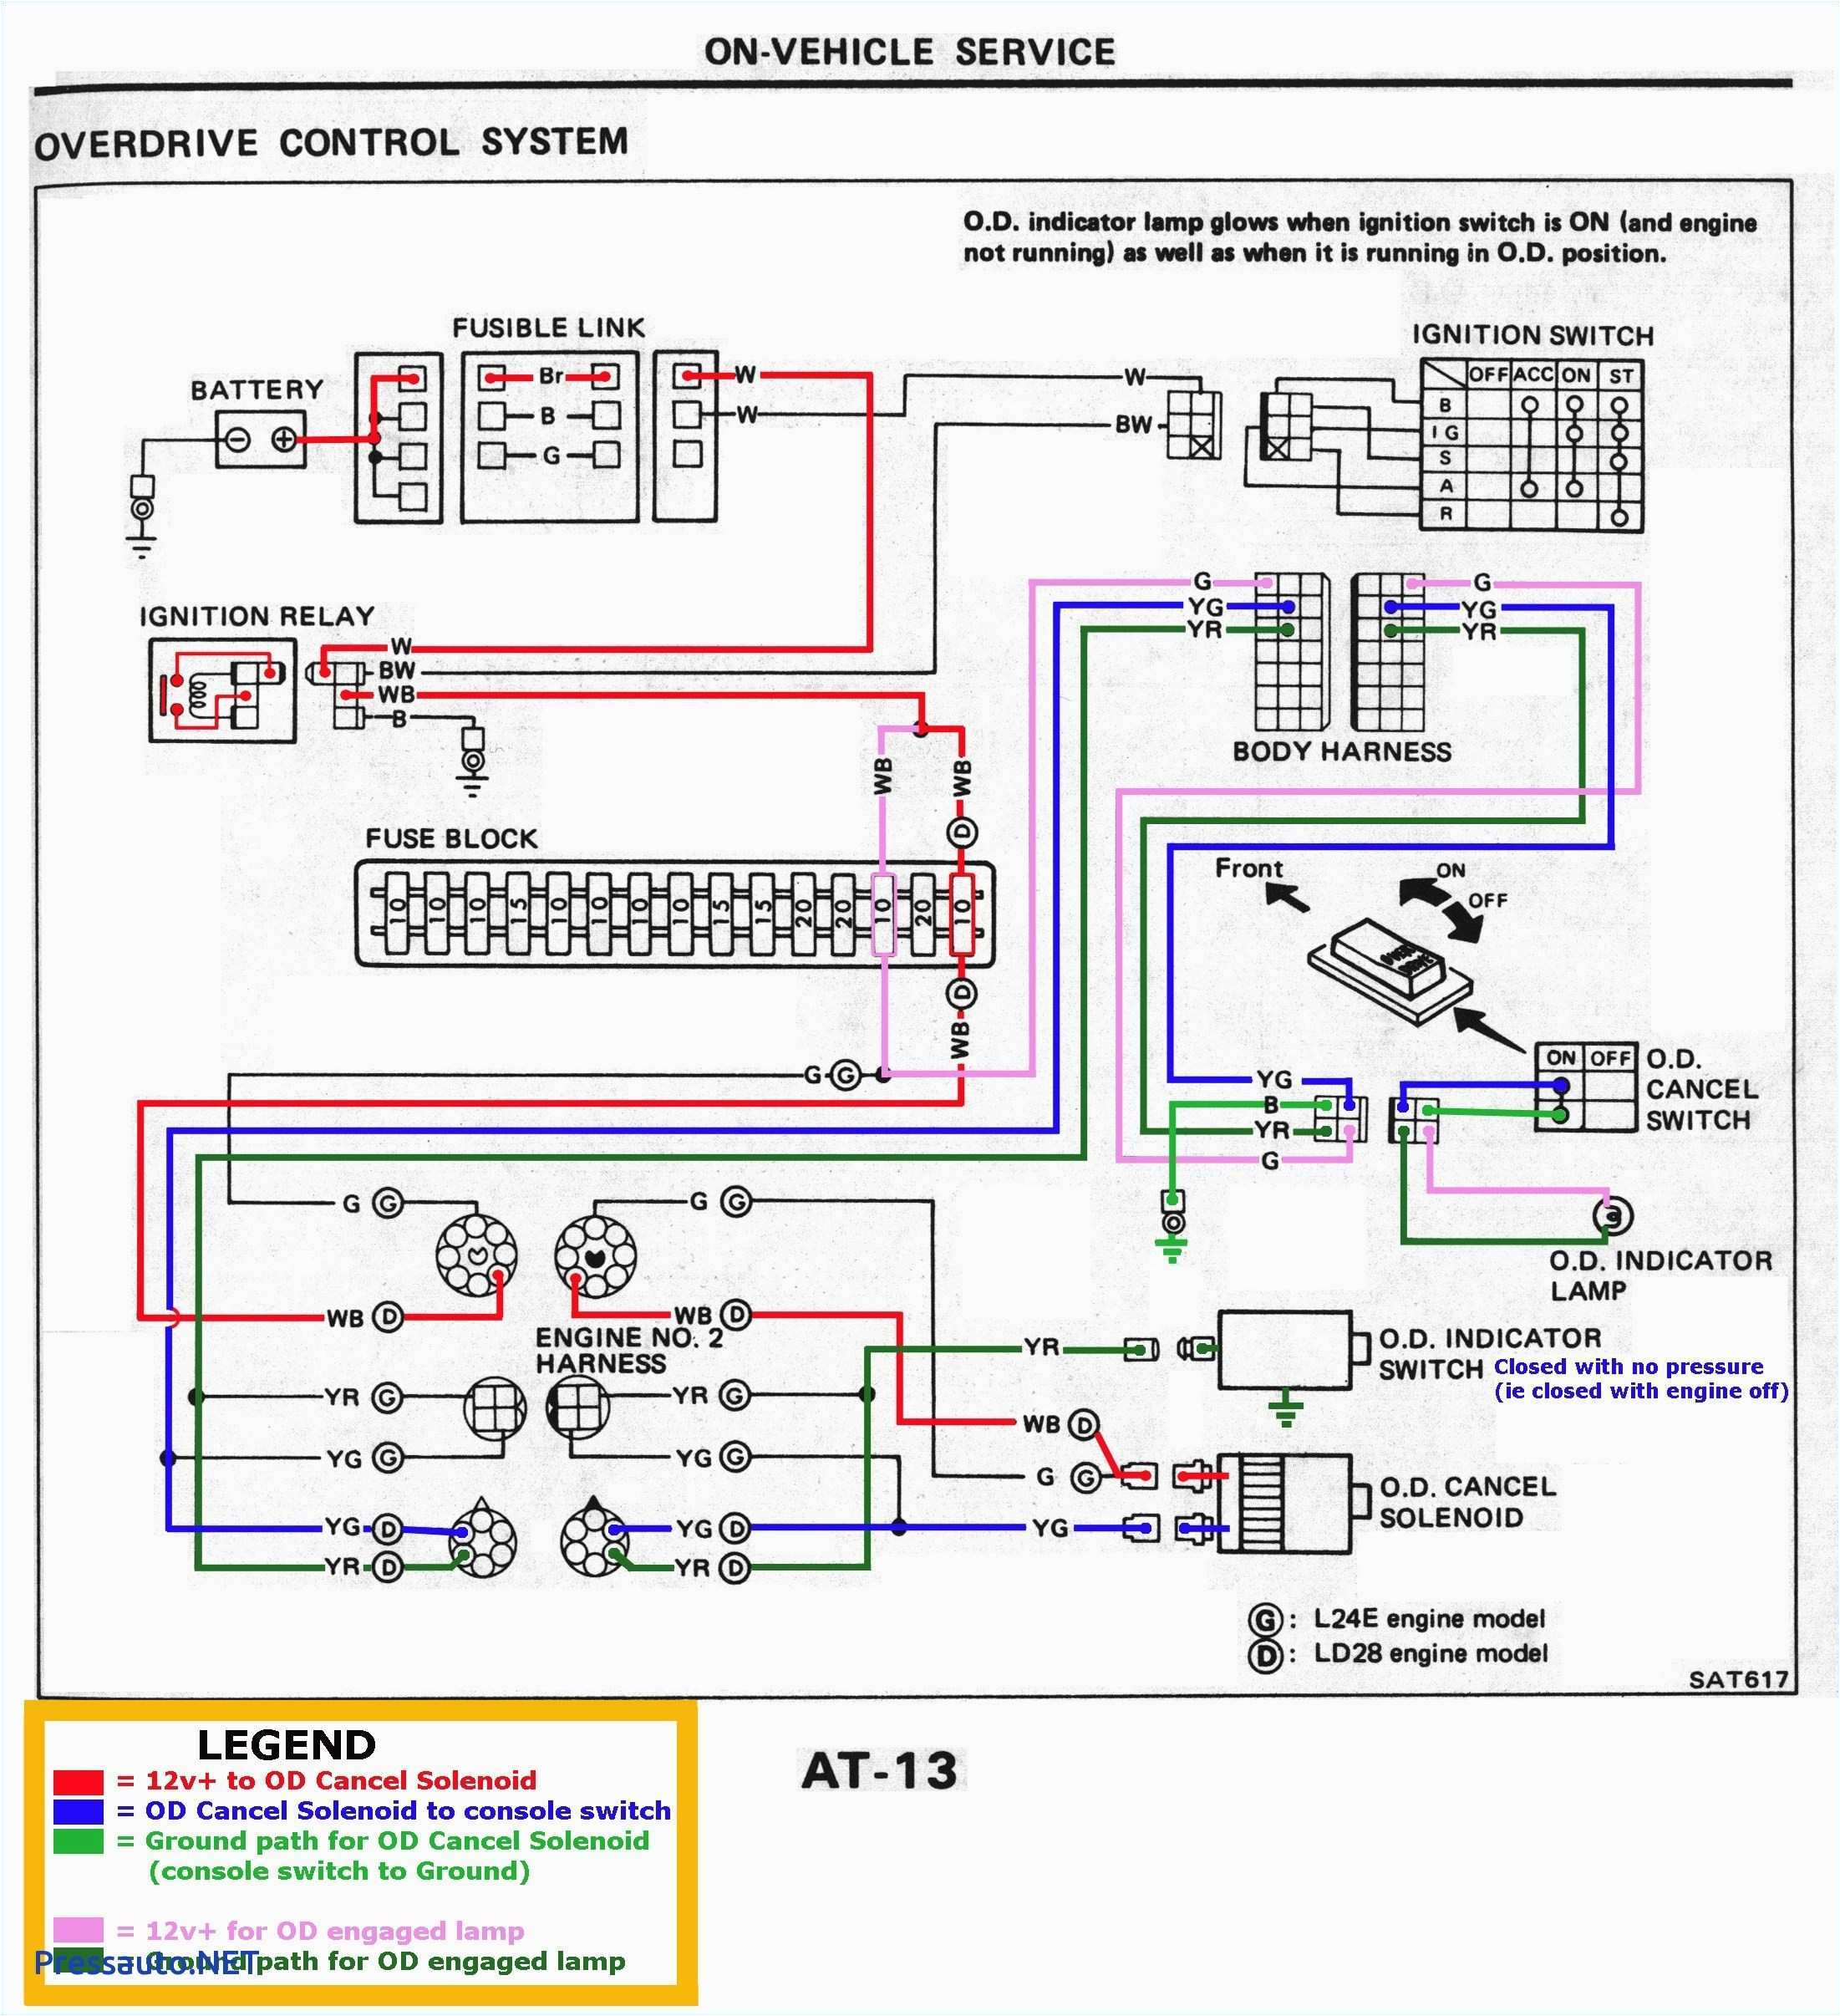 microtech lt8 wiring diagram elegant new invisible fence wiring diagram diagram wiring diagram collection